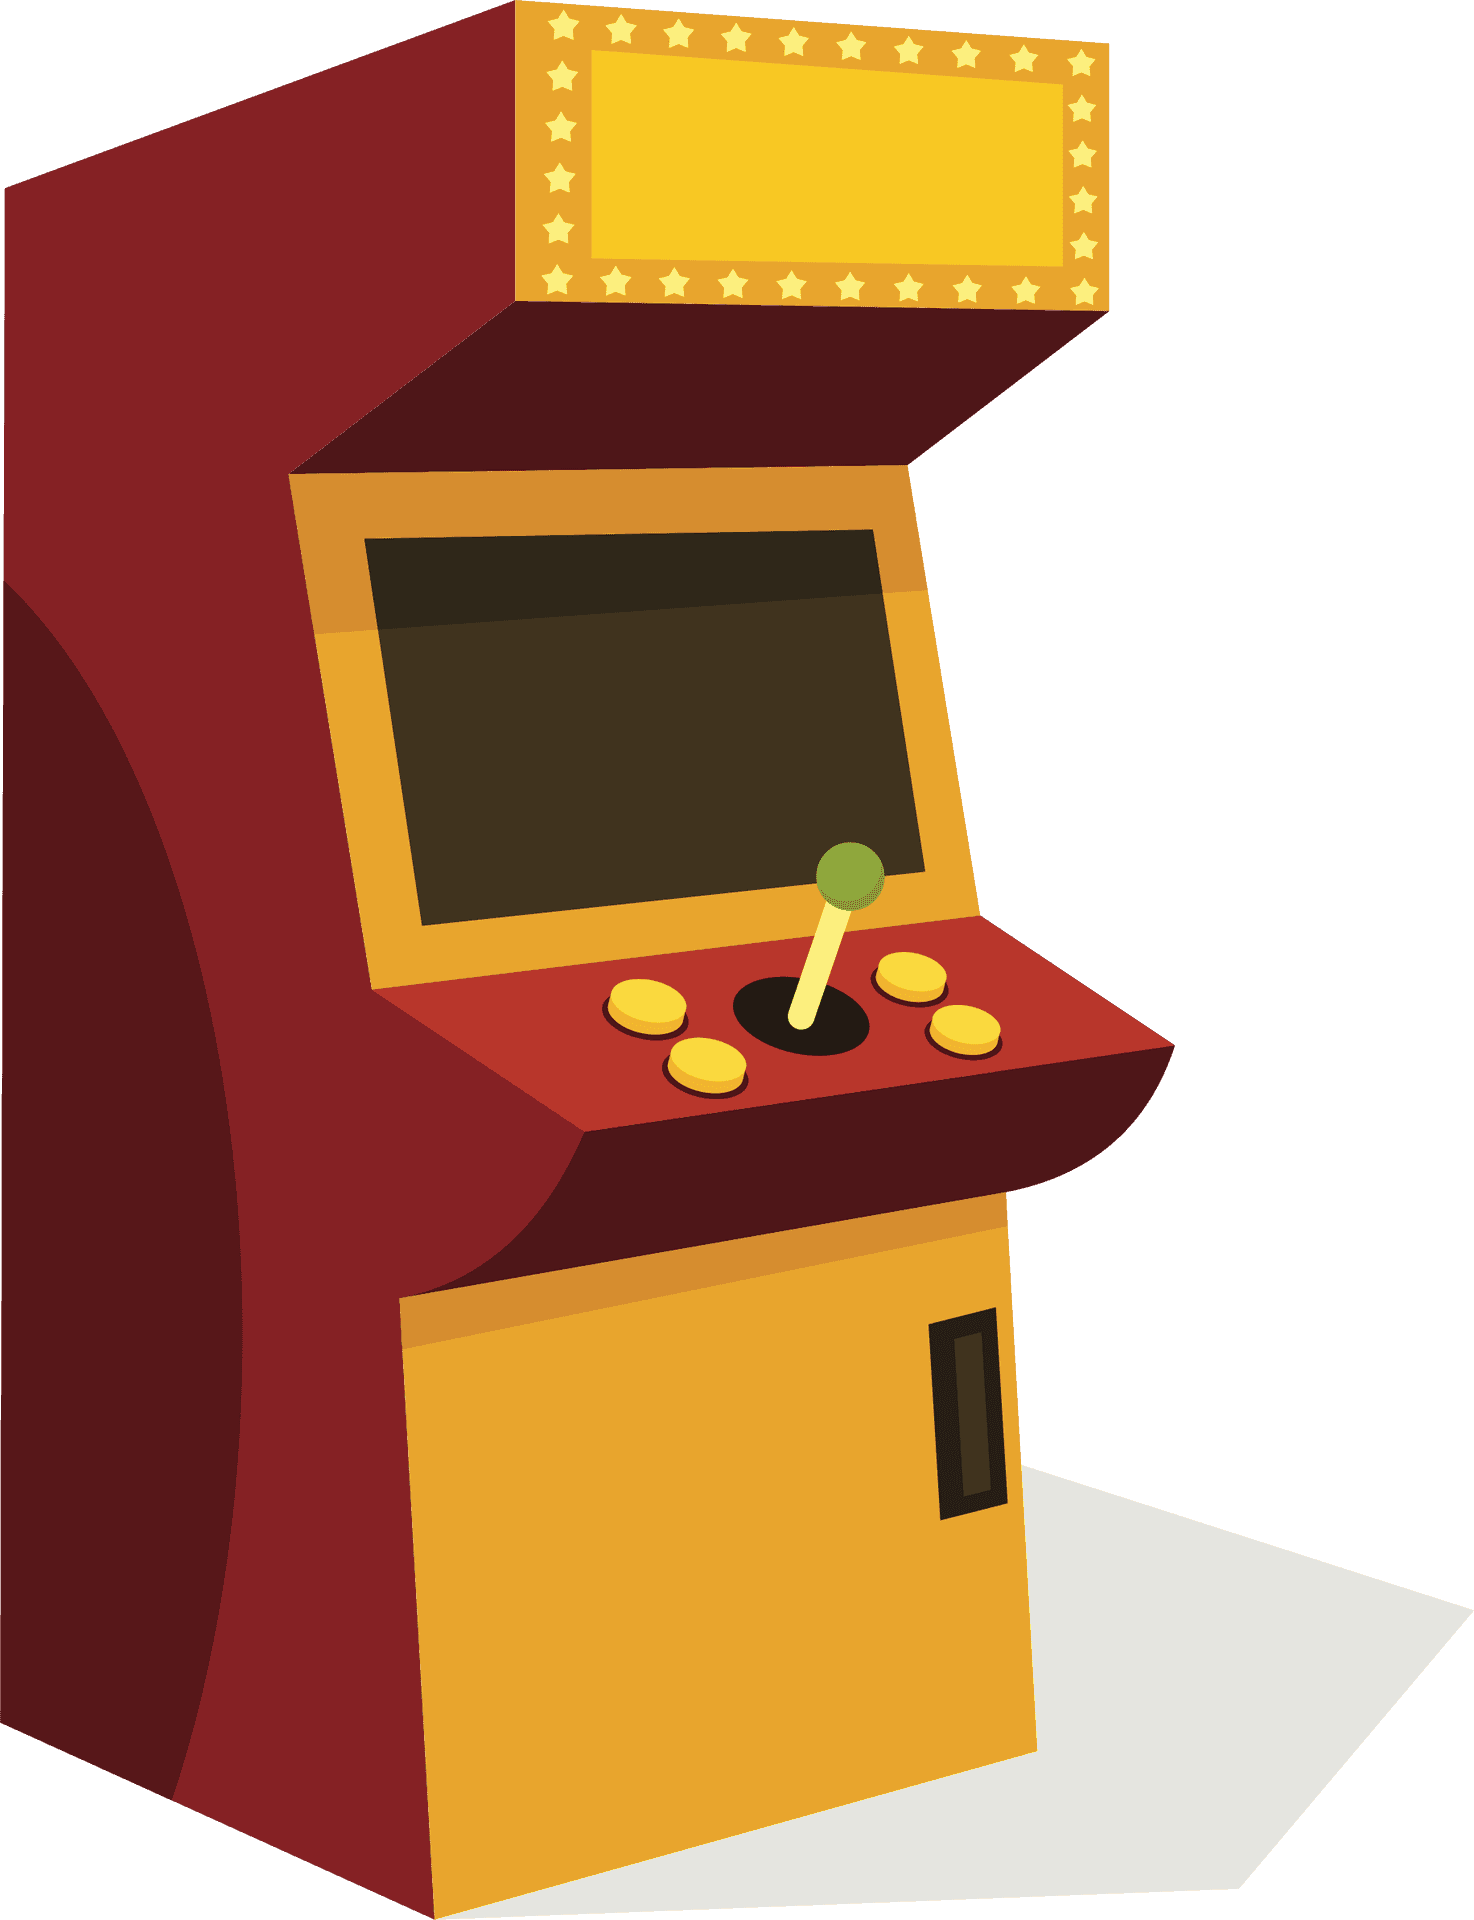 Classic Arcade Machine Illustration PNG image